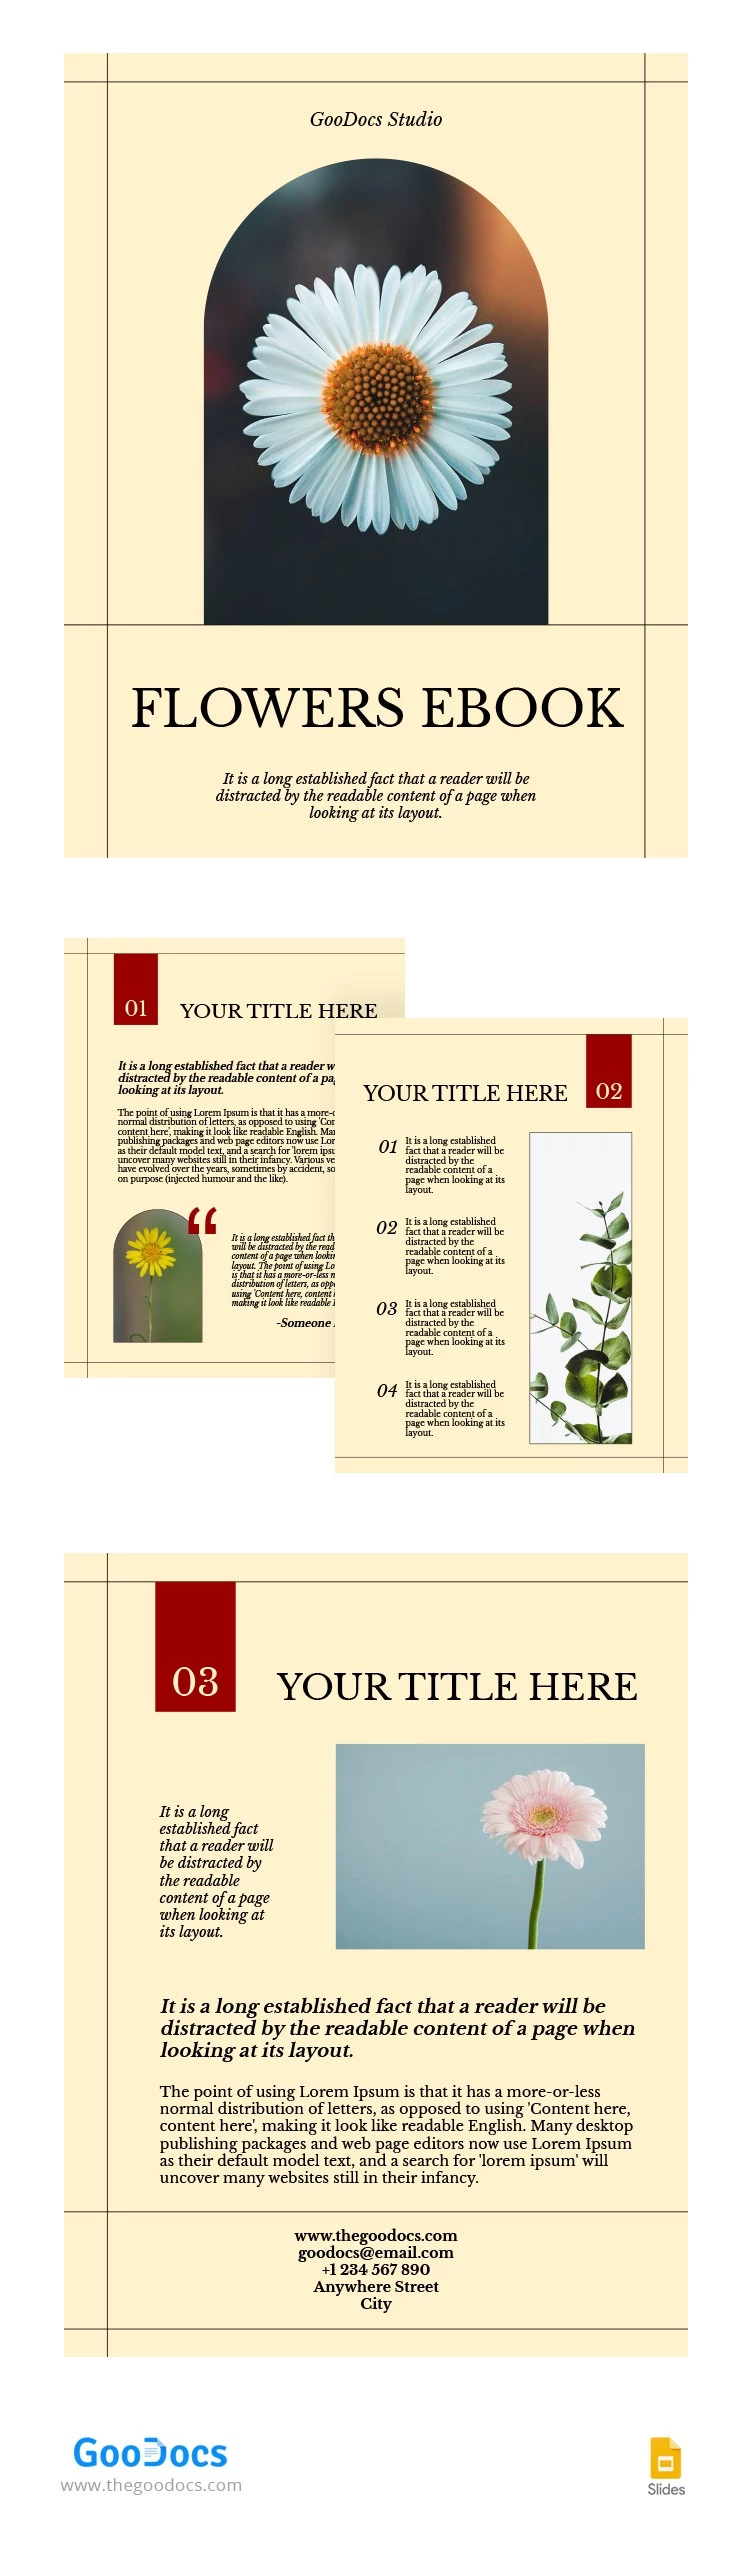 Sanfte Blumen E-Book - free Google Docs Template - 10064437